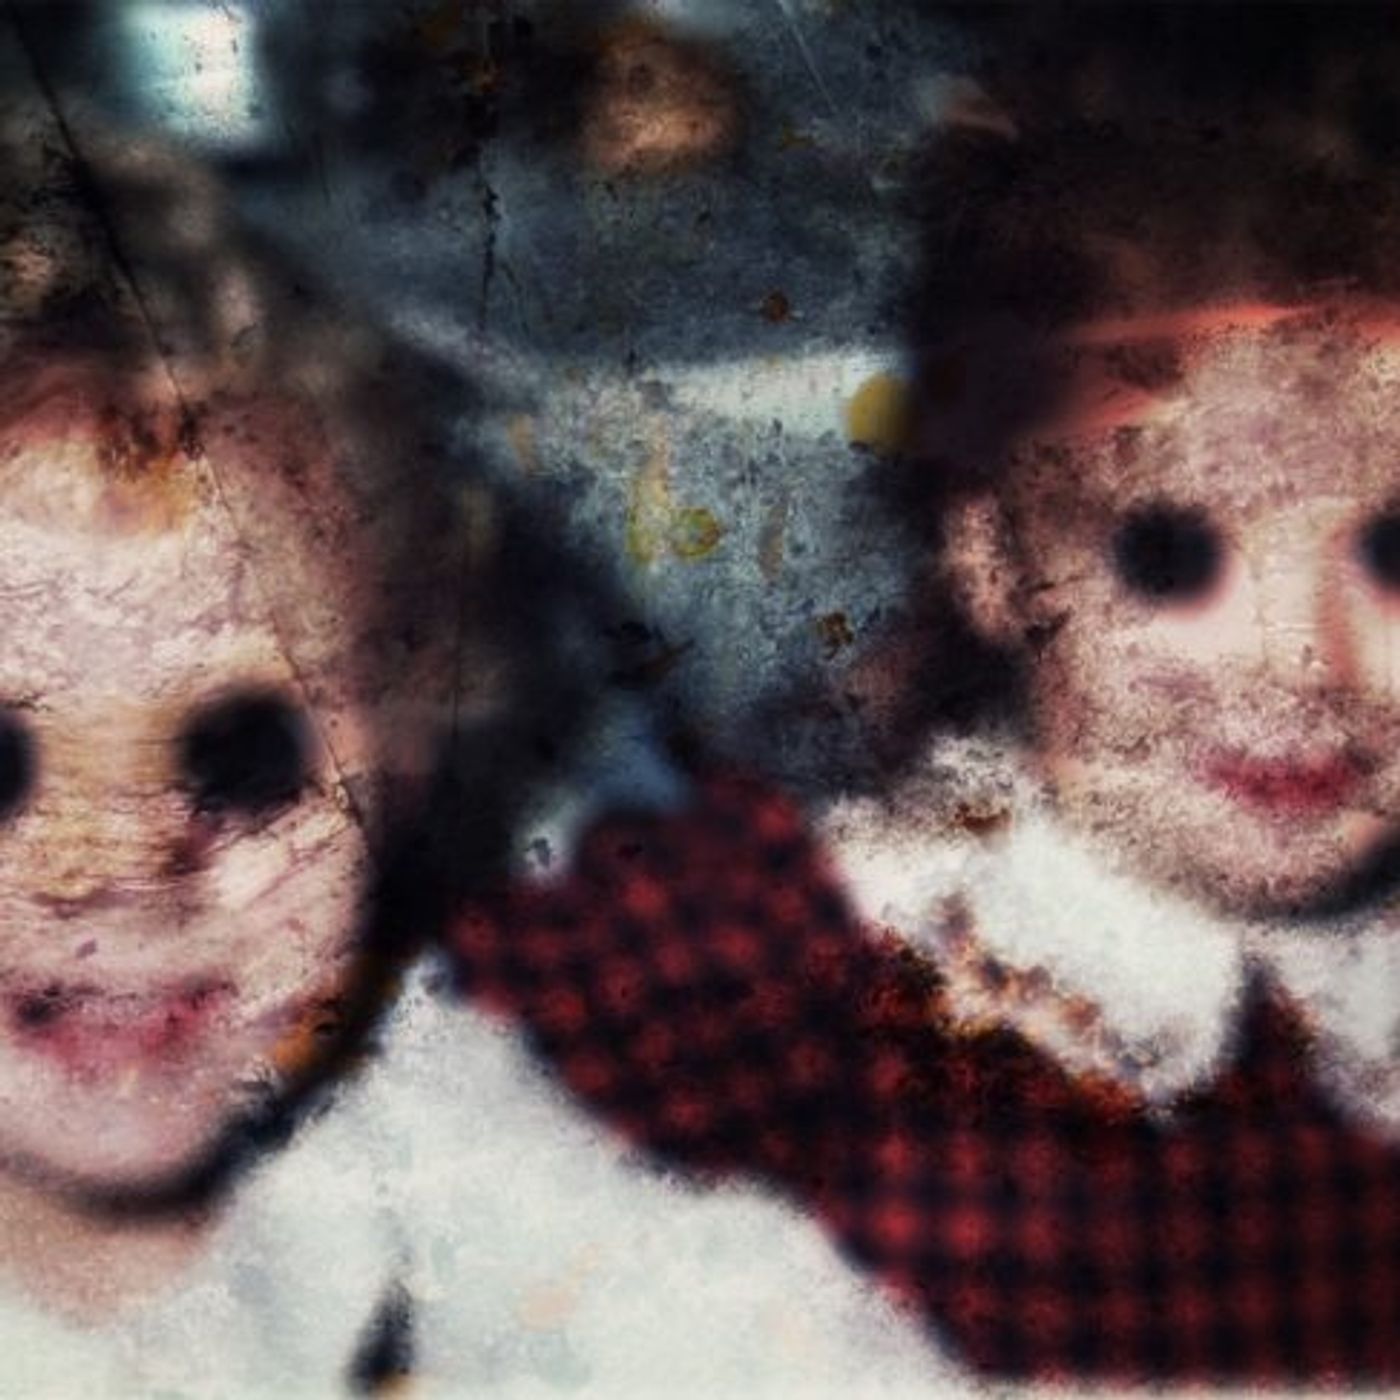 Parents Describe their Childs Disturbing Imaginary Friends | 2020 Five Days of Halloween Special 2/5